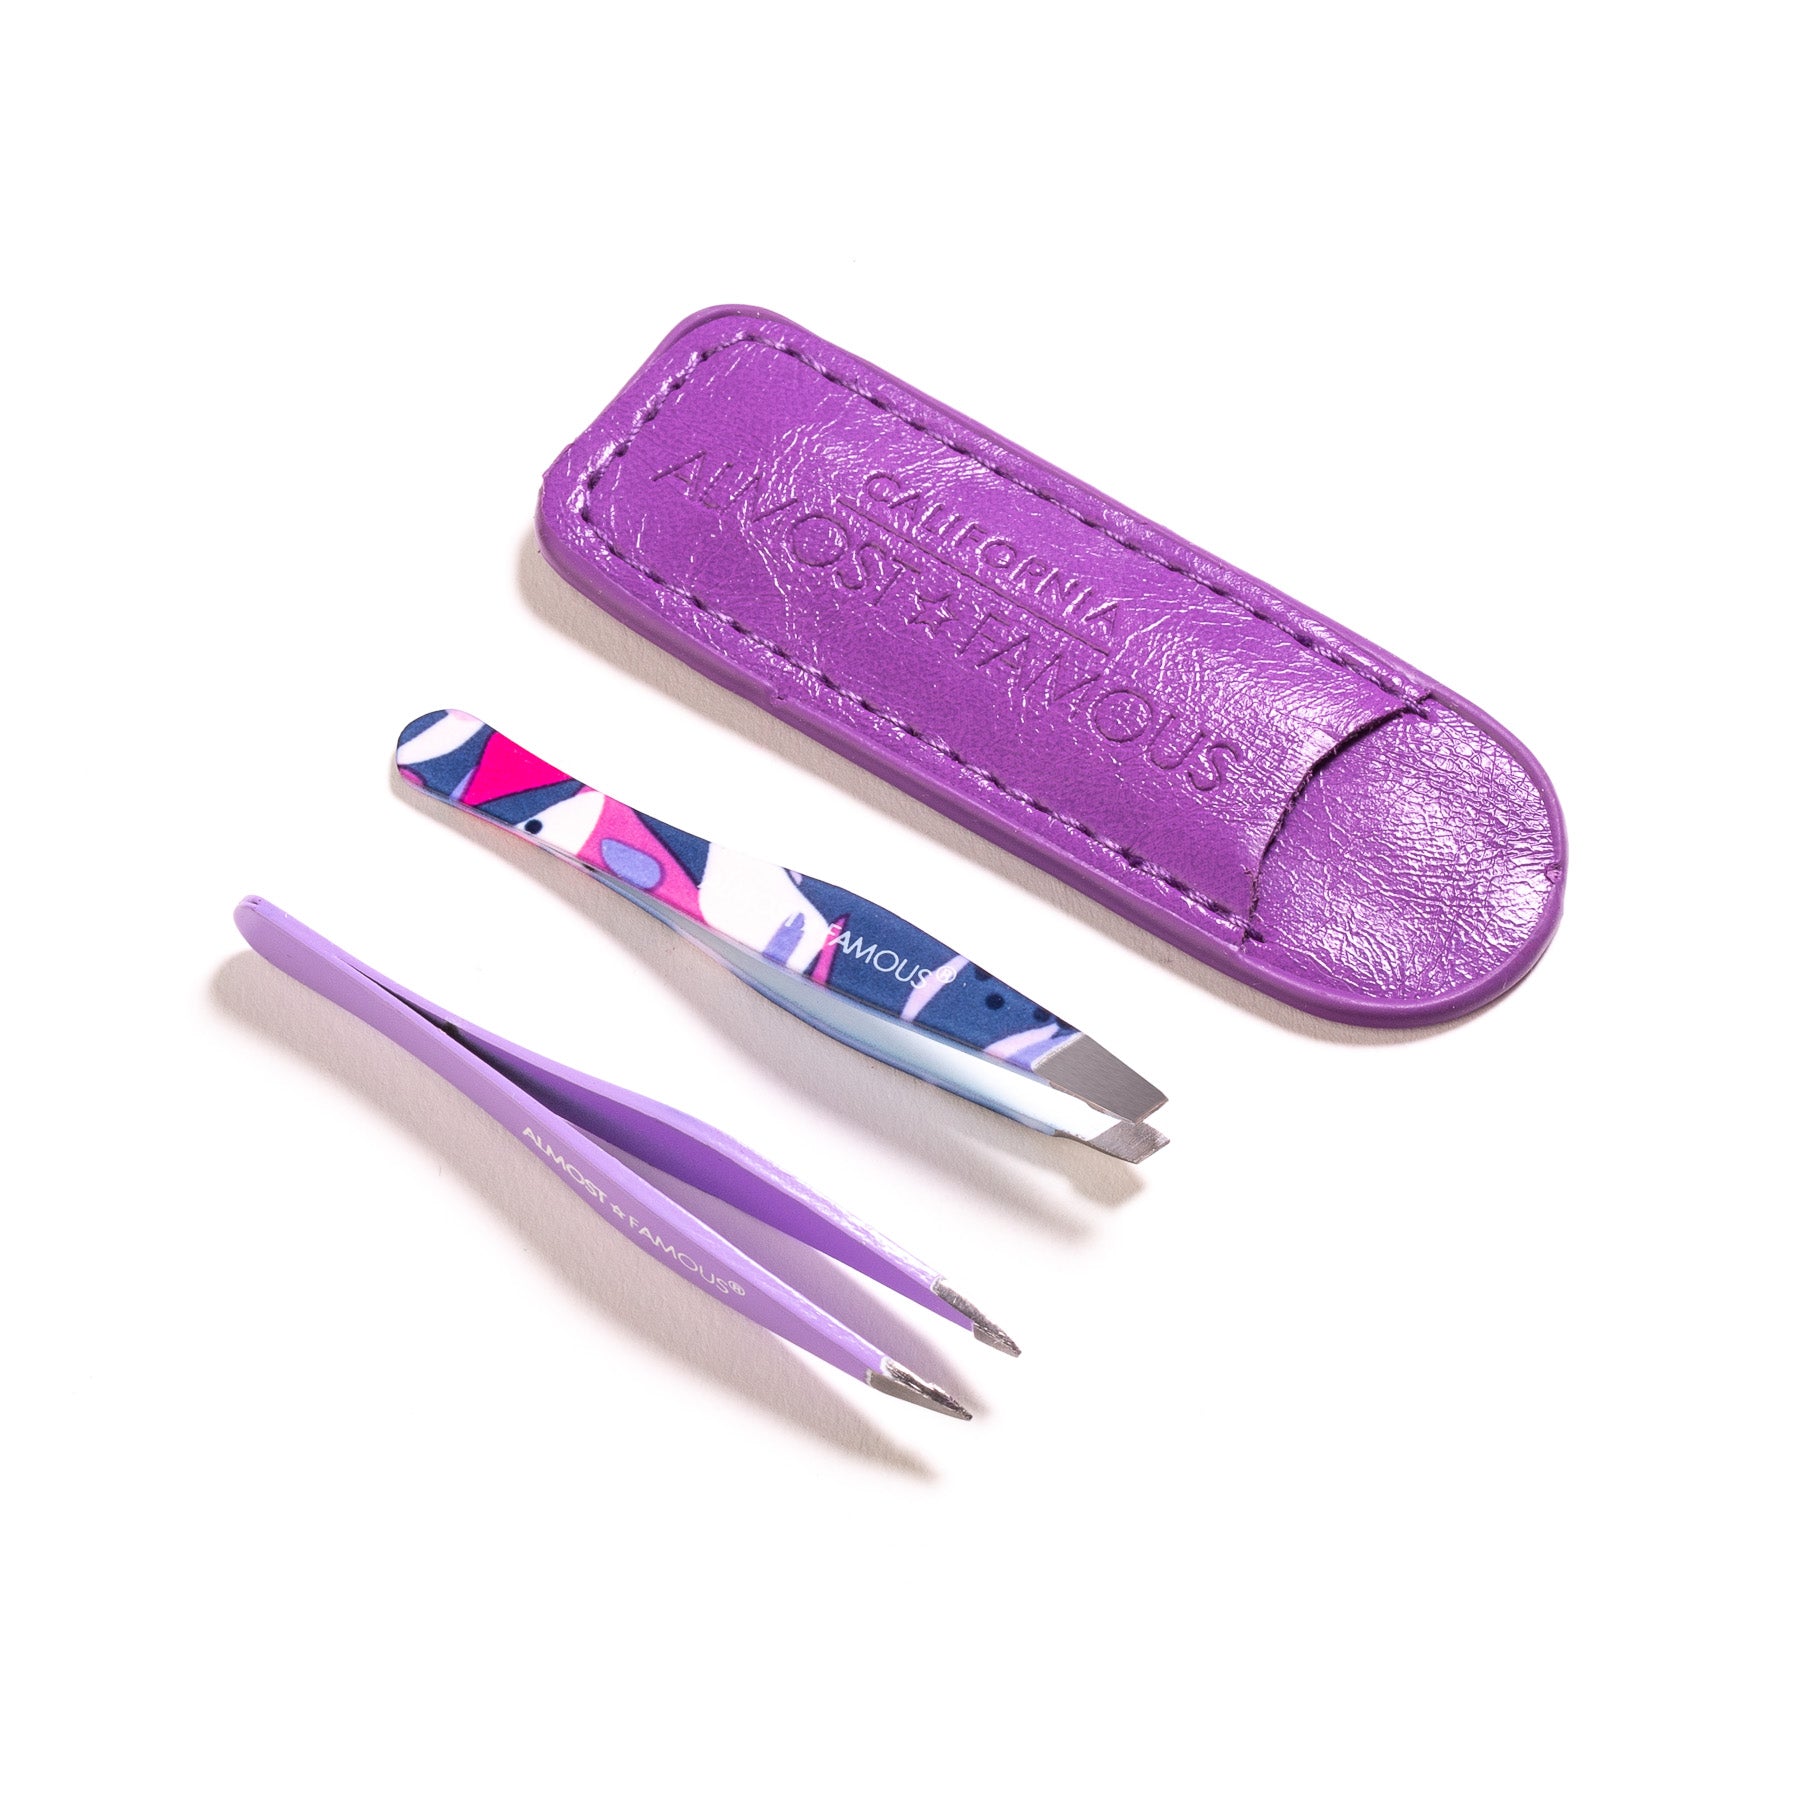 Flawless Finish Beauty Kit (Purple)